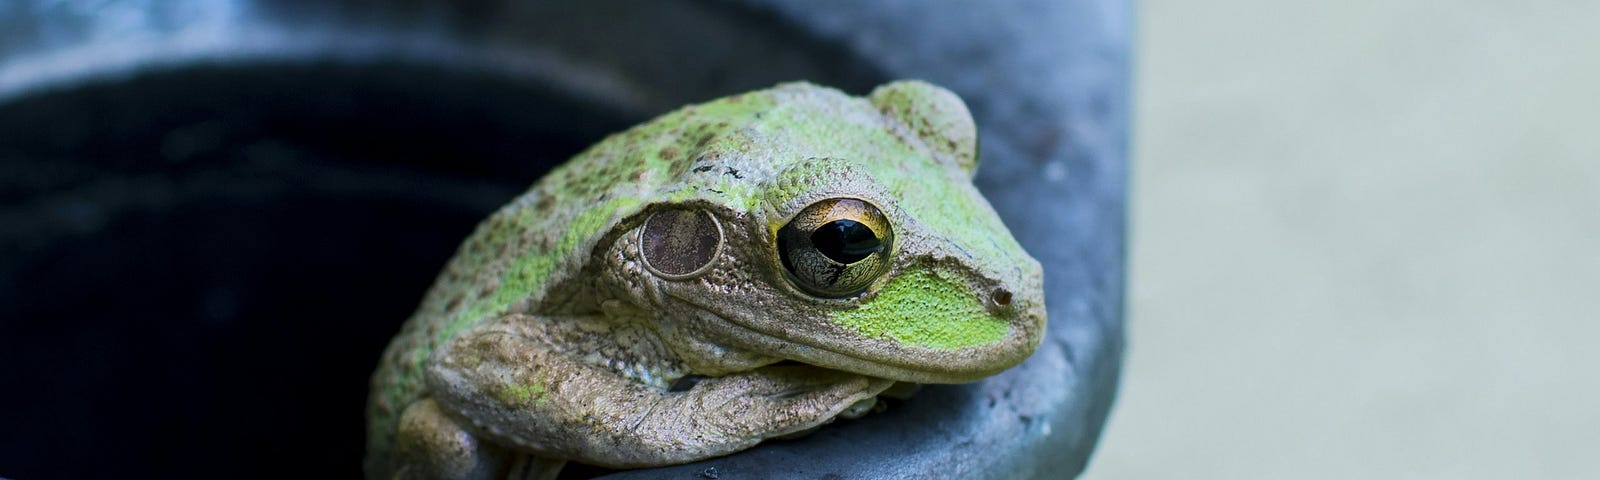 green frog peeking out of a metal pot